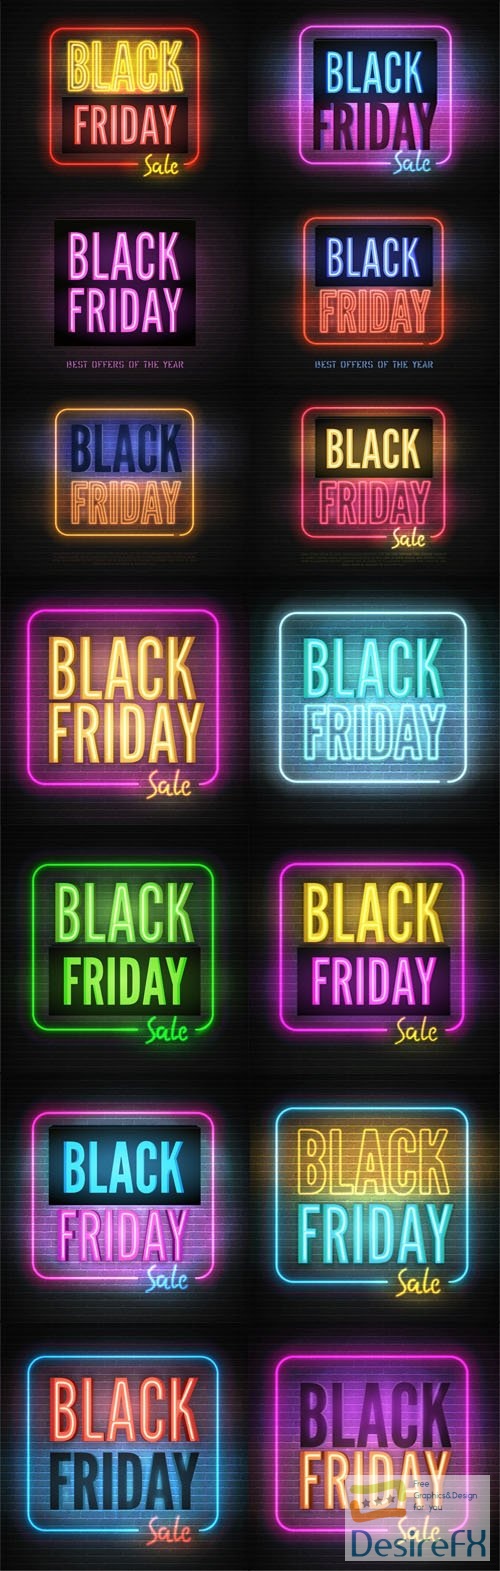 Black Friday - 20 Neon Light Box Vector Templates Collection